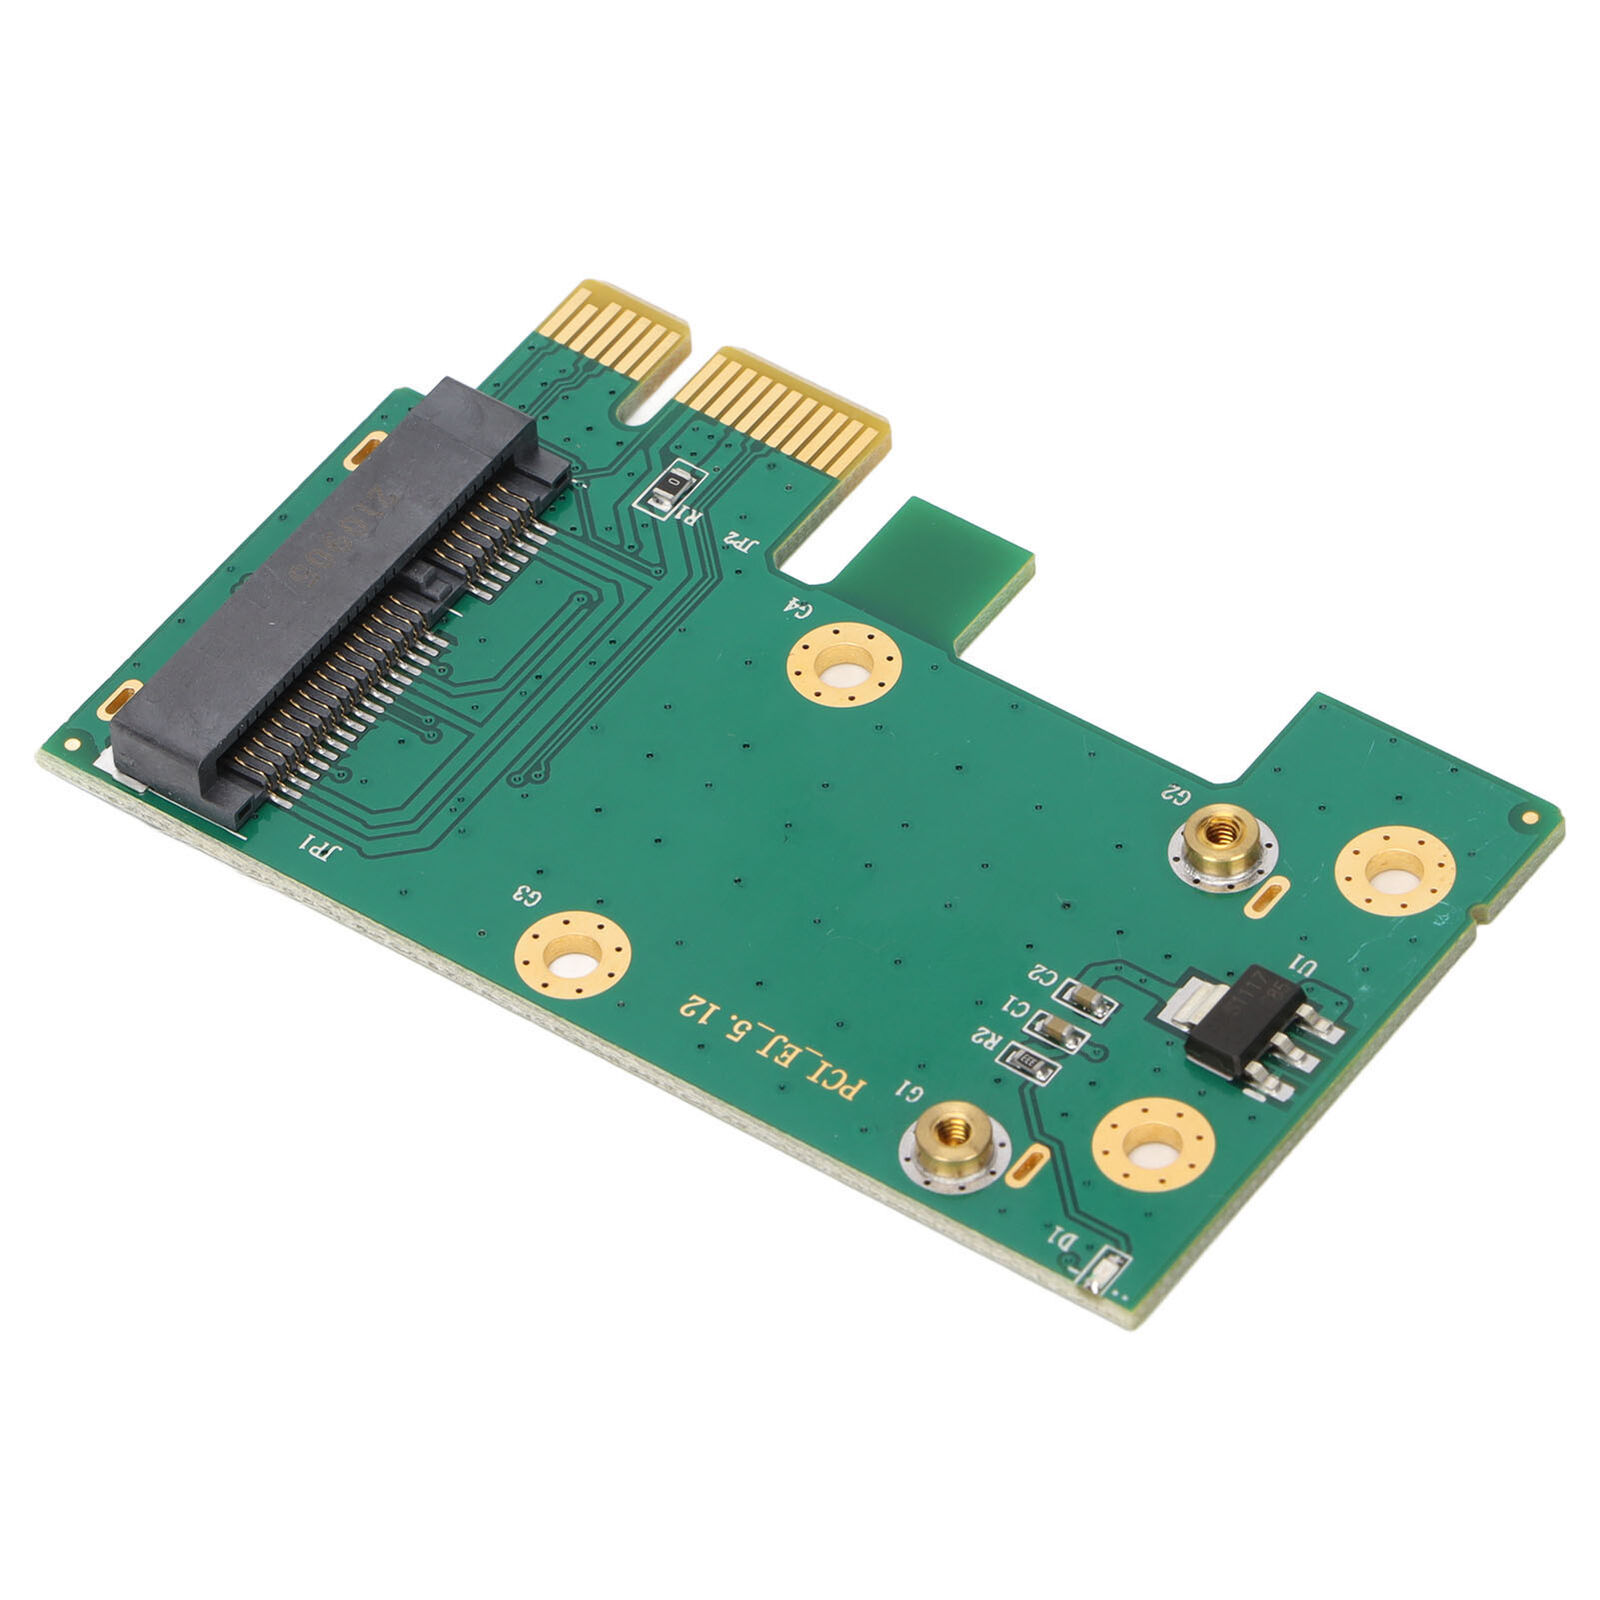 Mini PCIE To PCIE Adapter Card Mini PCI Express To PCI Express Card Adapter